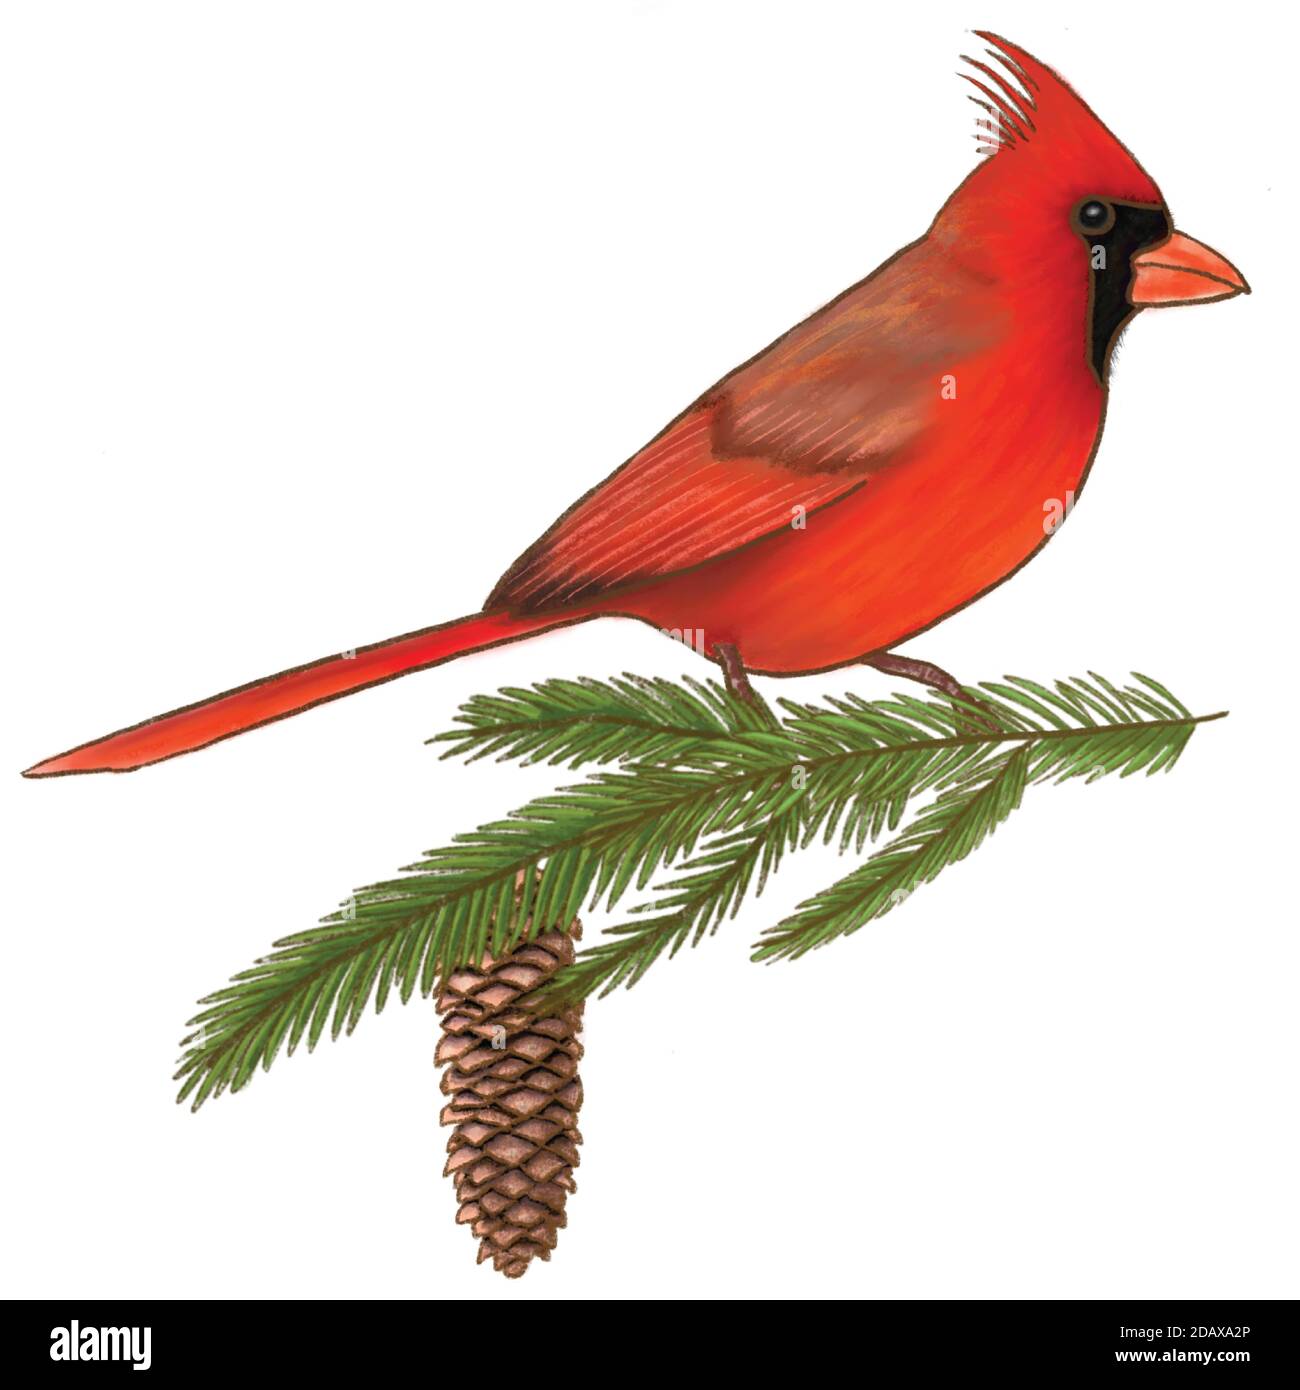 Cardinal bird Cut Out Stock Images & Pictures - Alamy